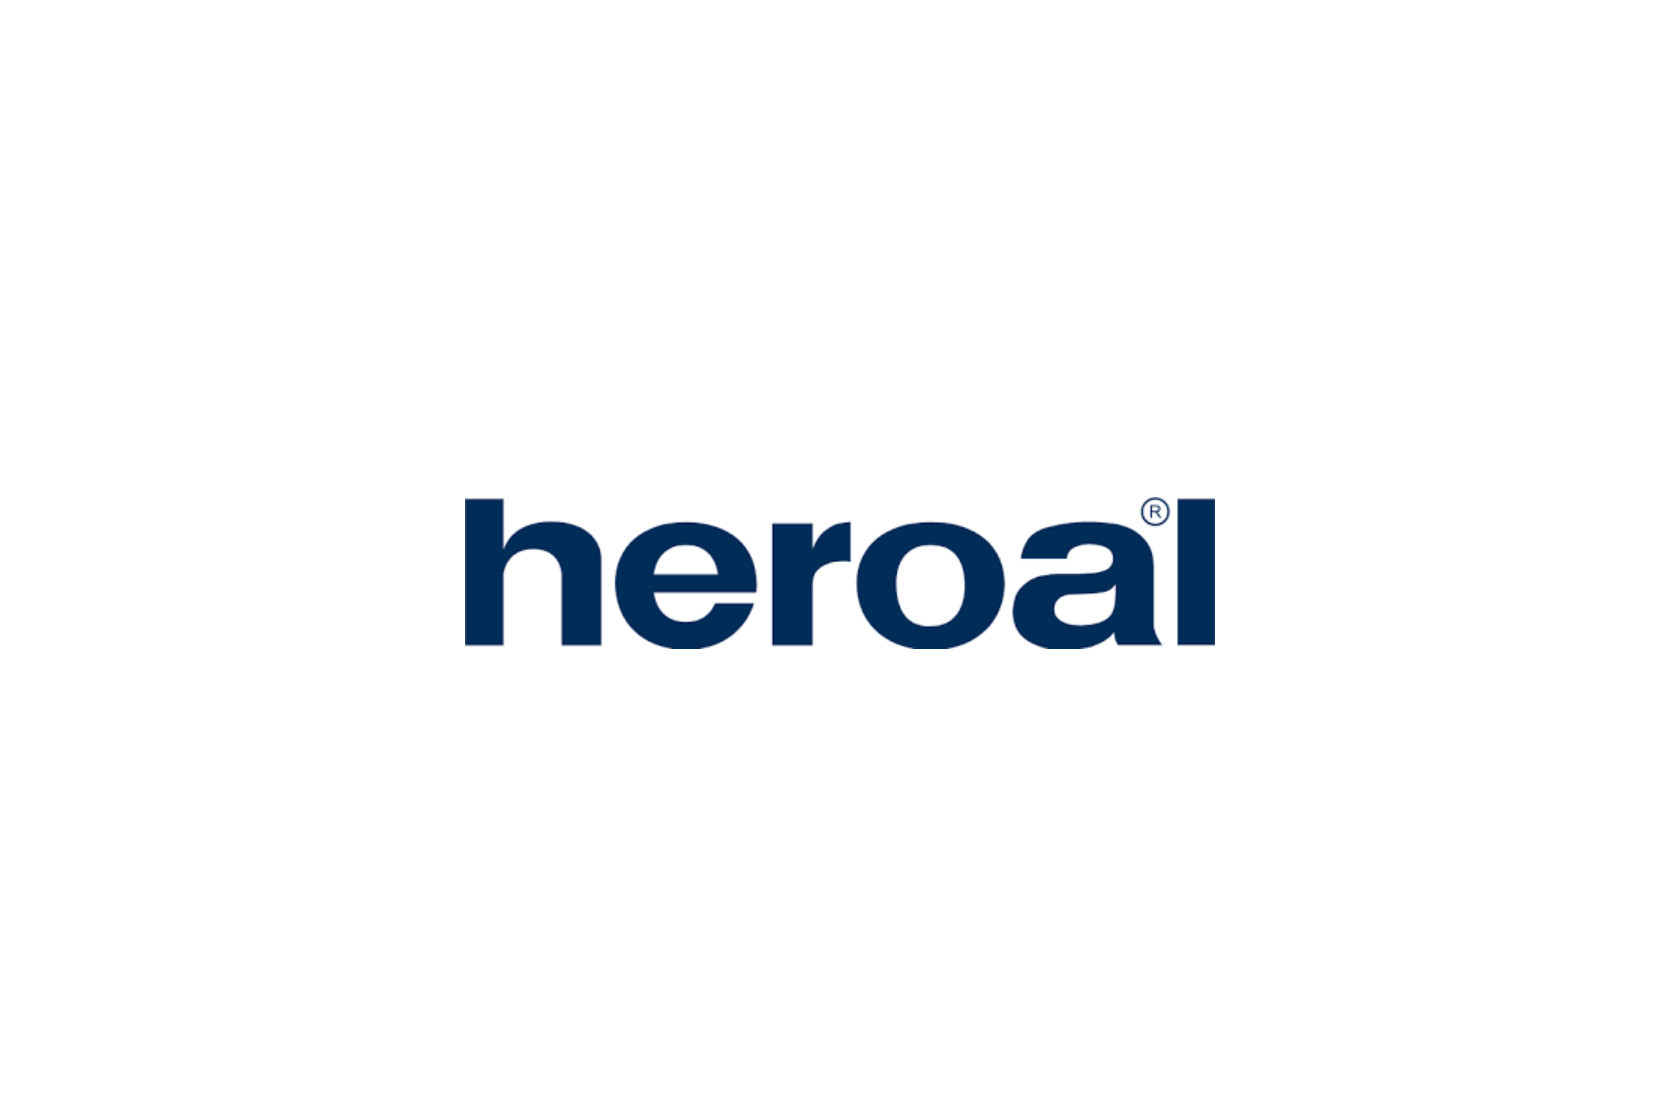 heroal logo